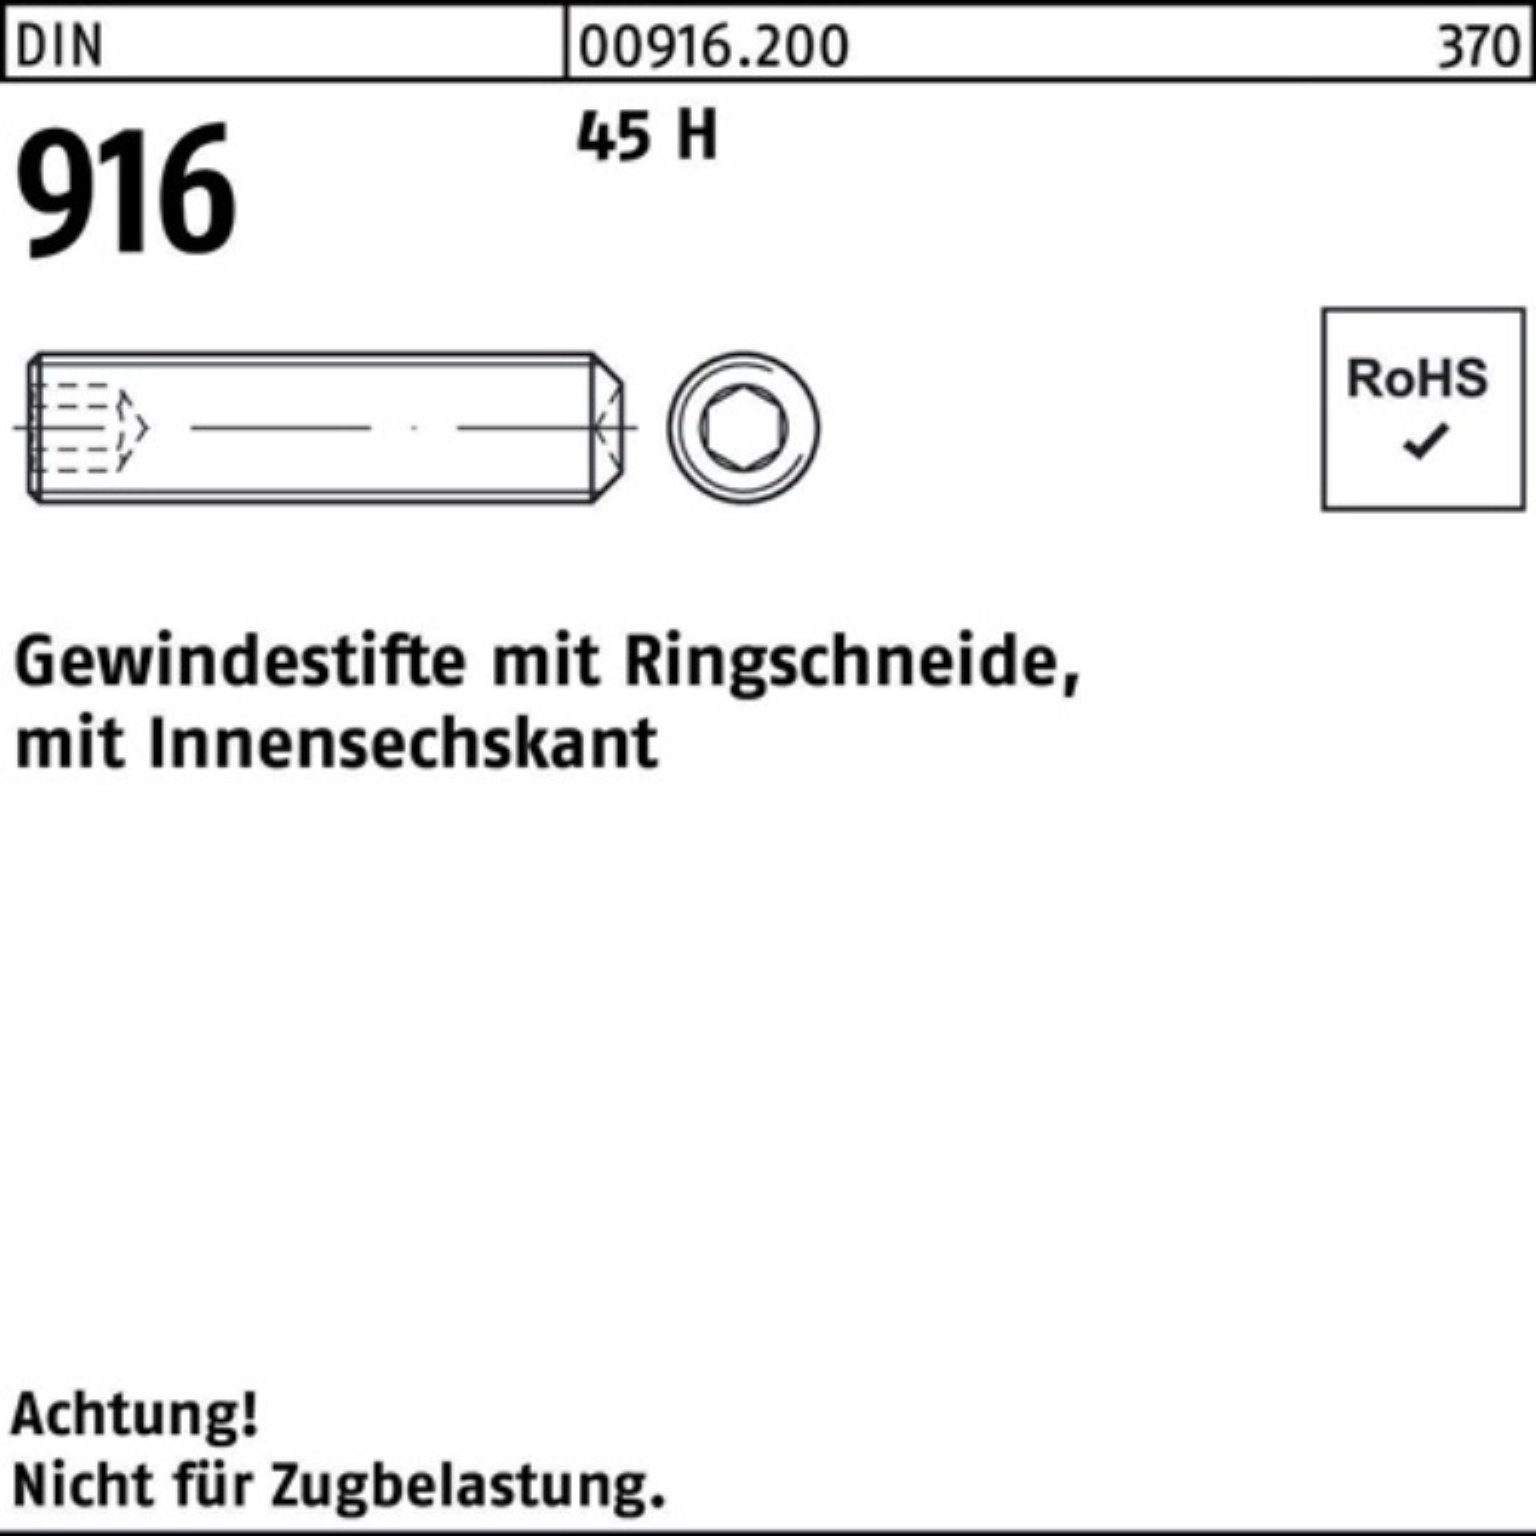 Reyher Gewindebolzen 100er Pack Gewindestift DIN 916 Ringschn./Innen-6kt M20x 30 45 H 50 St